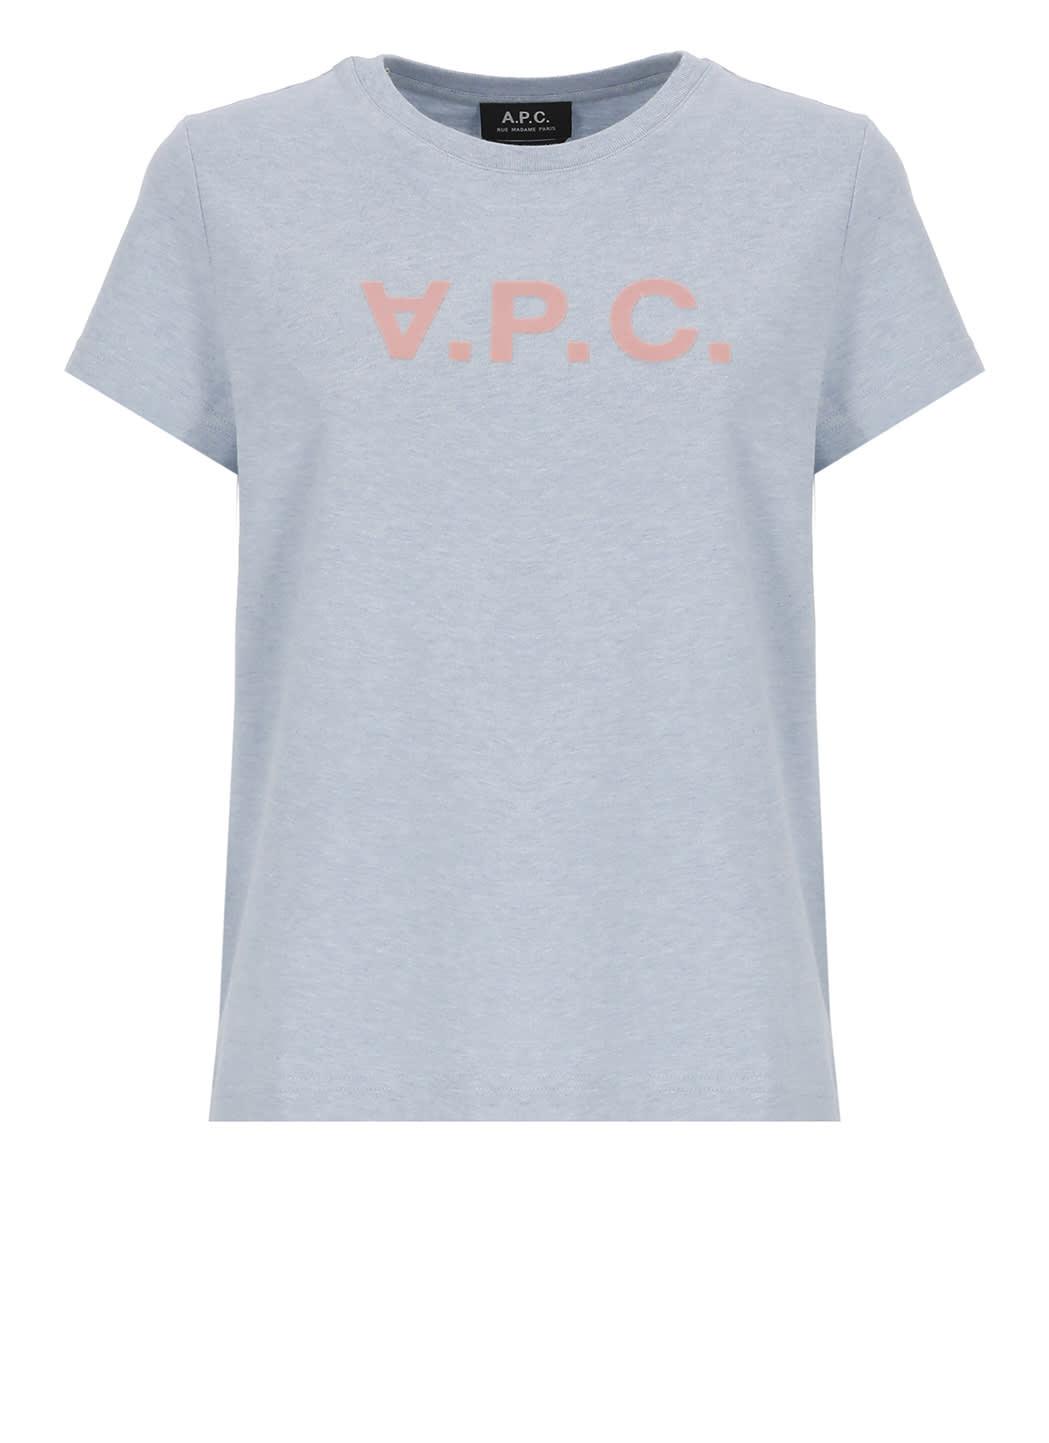 A.P.C. Vpc T-shirt in Blue | Lyst